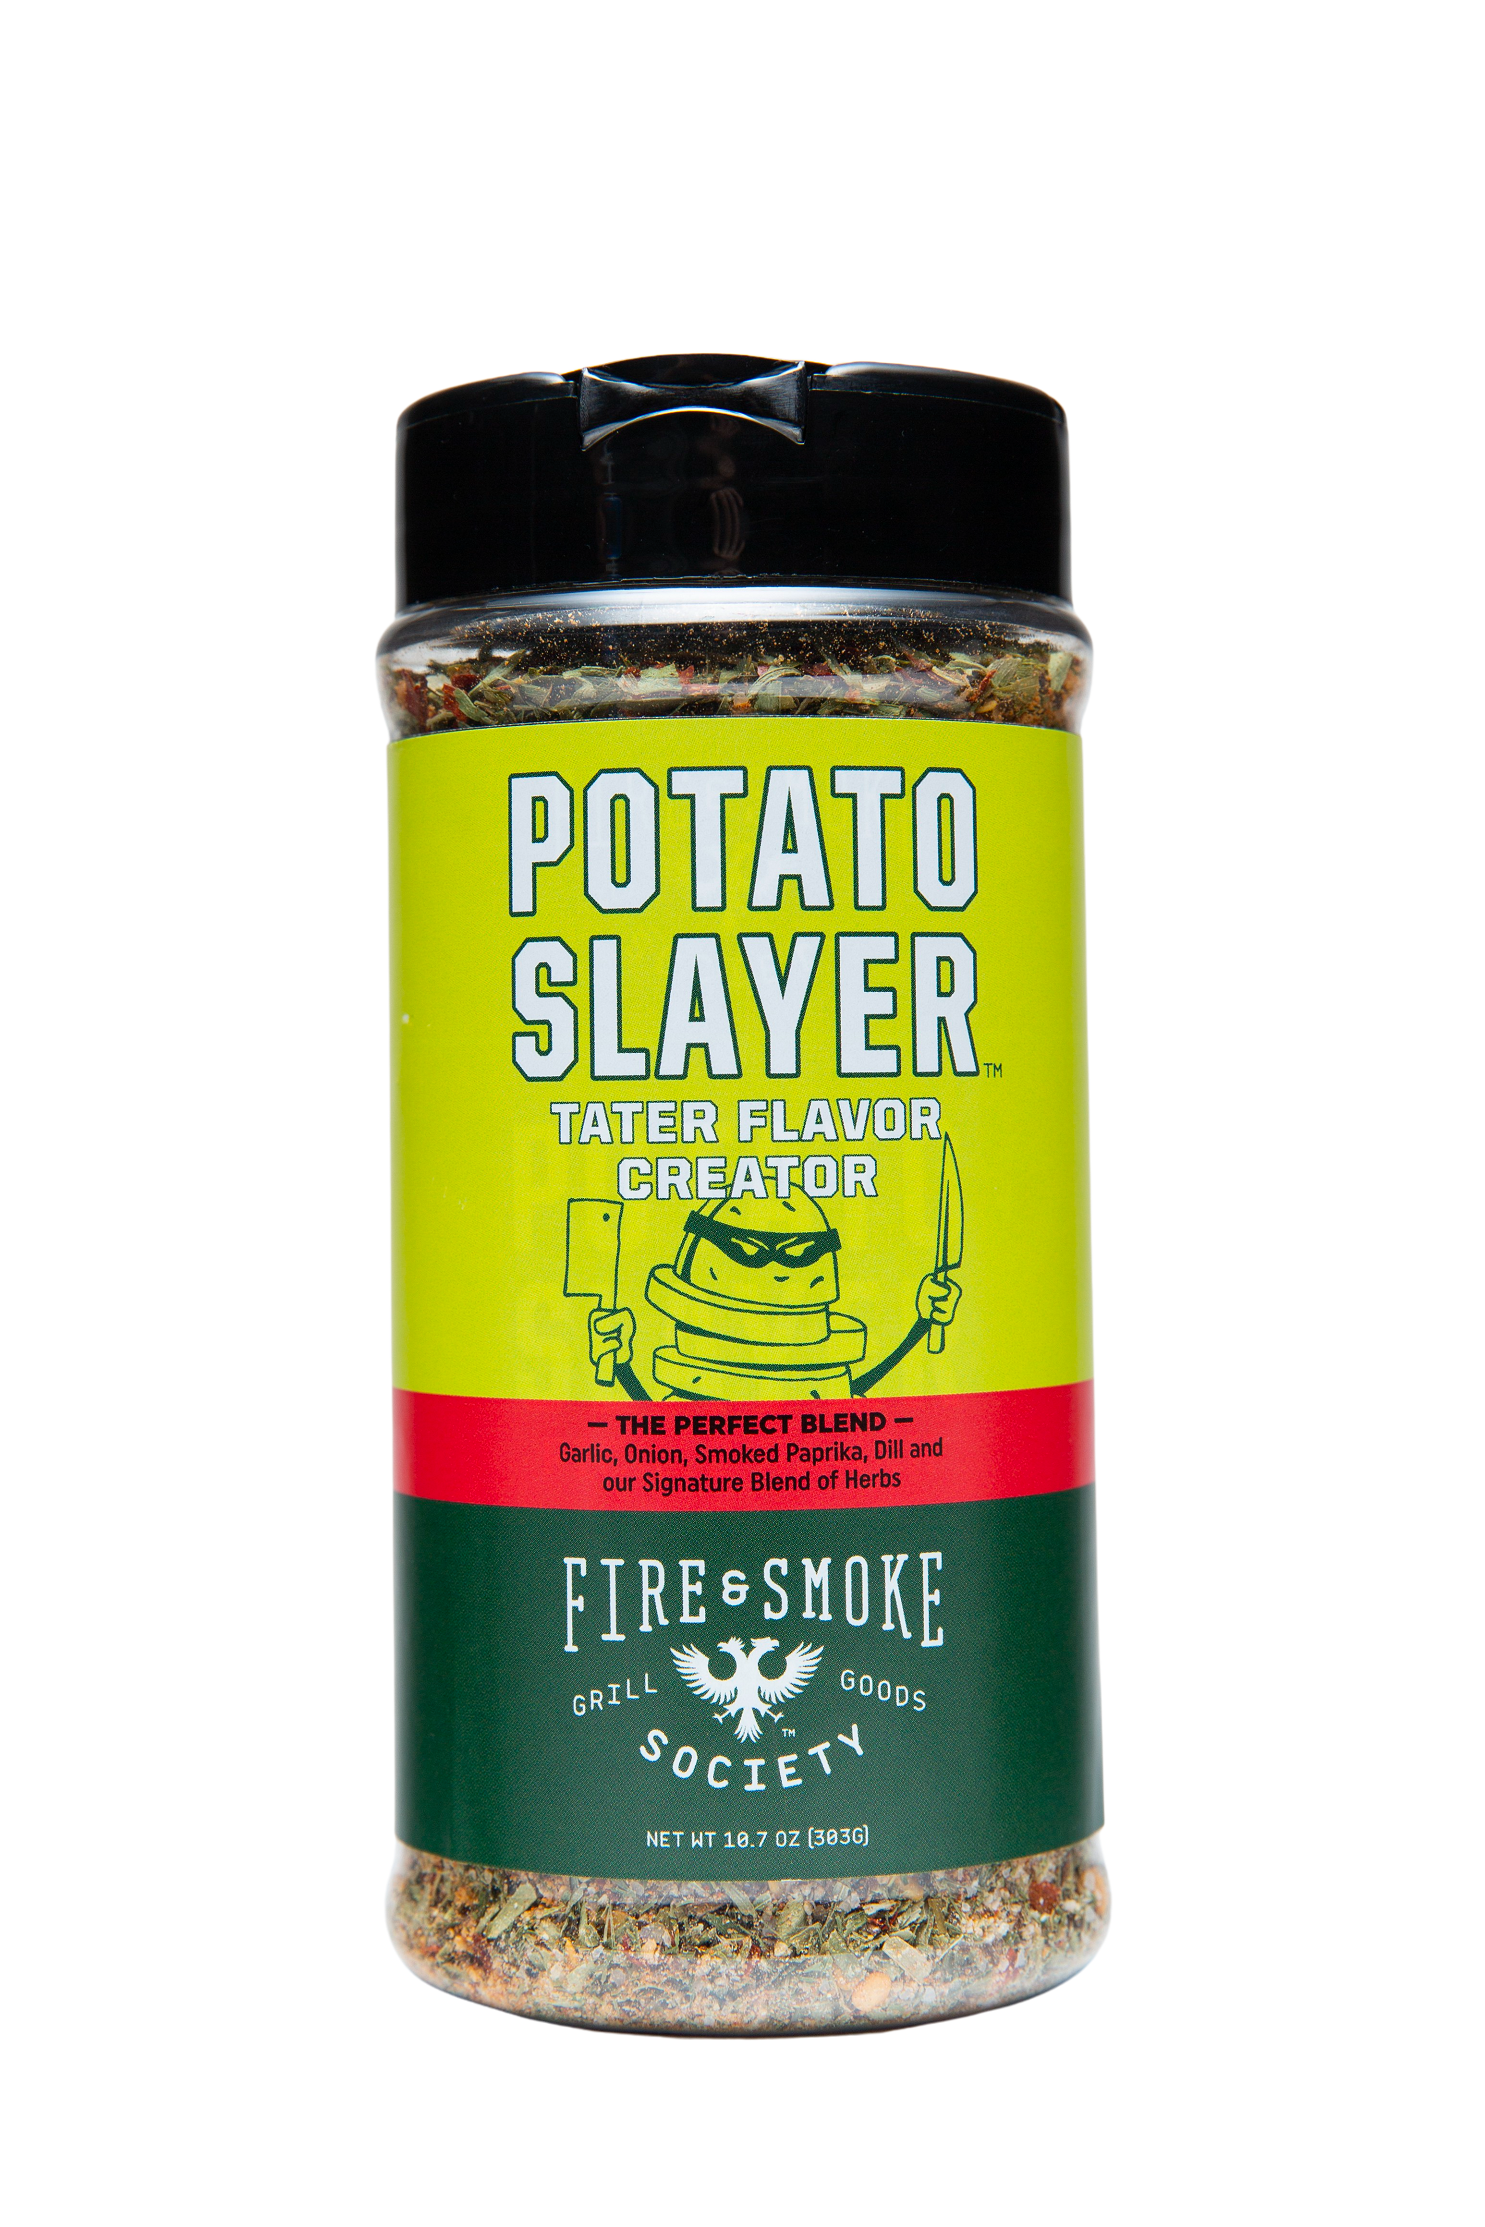 Fire and Smoke Society Potato Slayer Seasoning, 10.7 oz - Food 4 Less